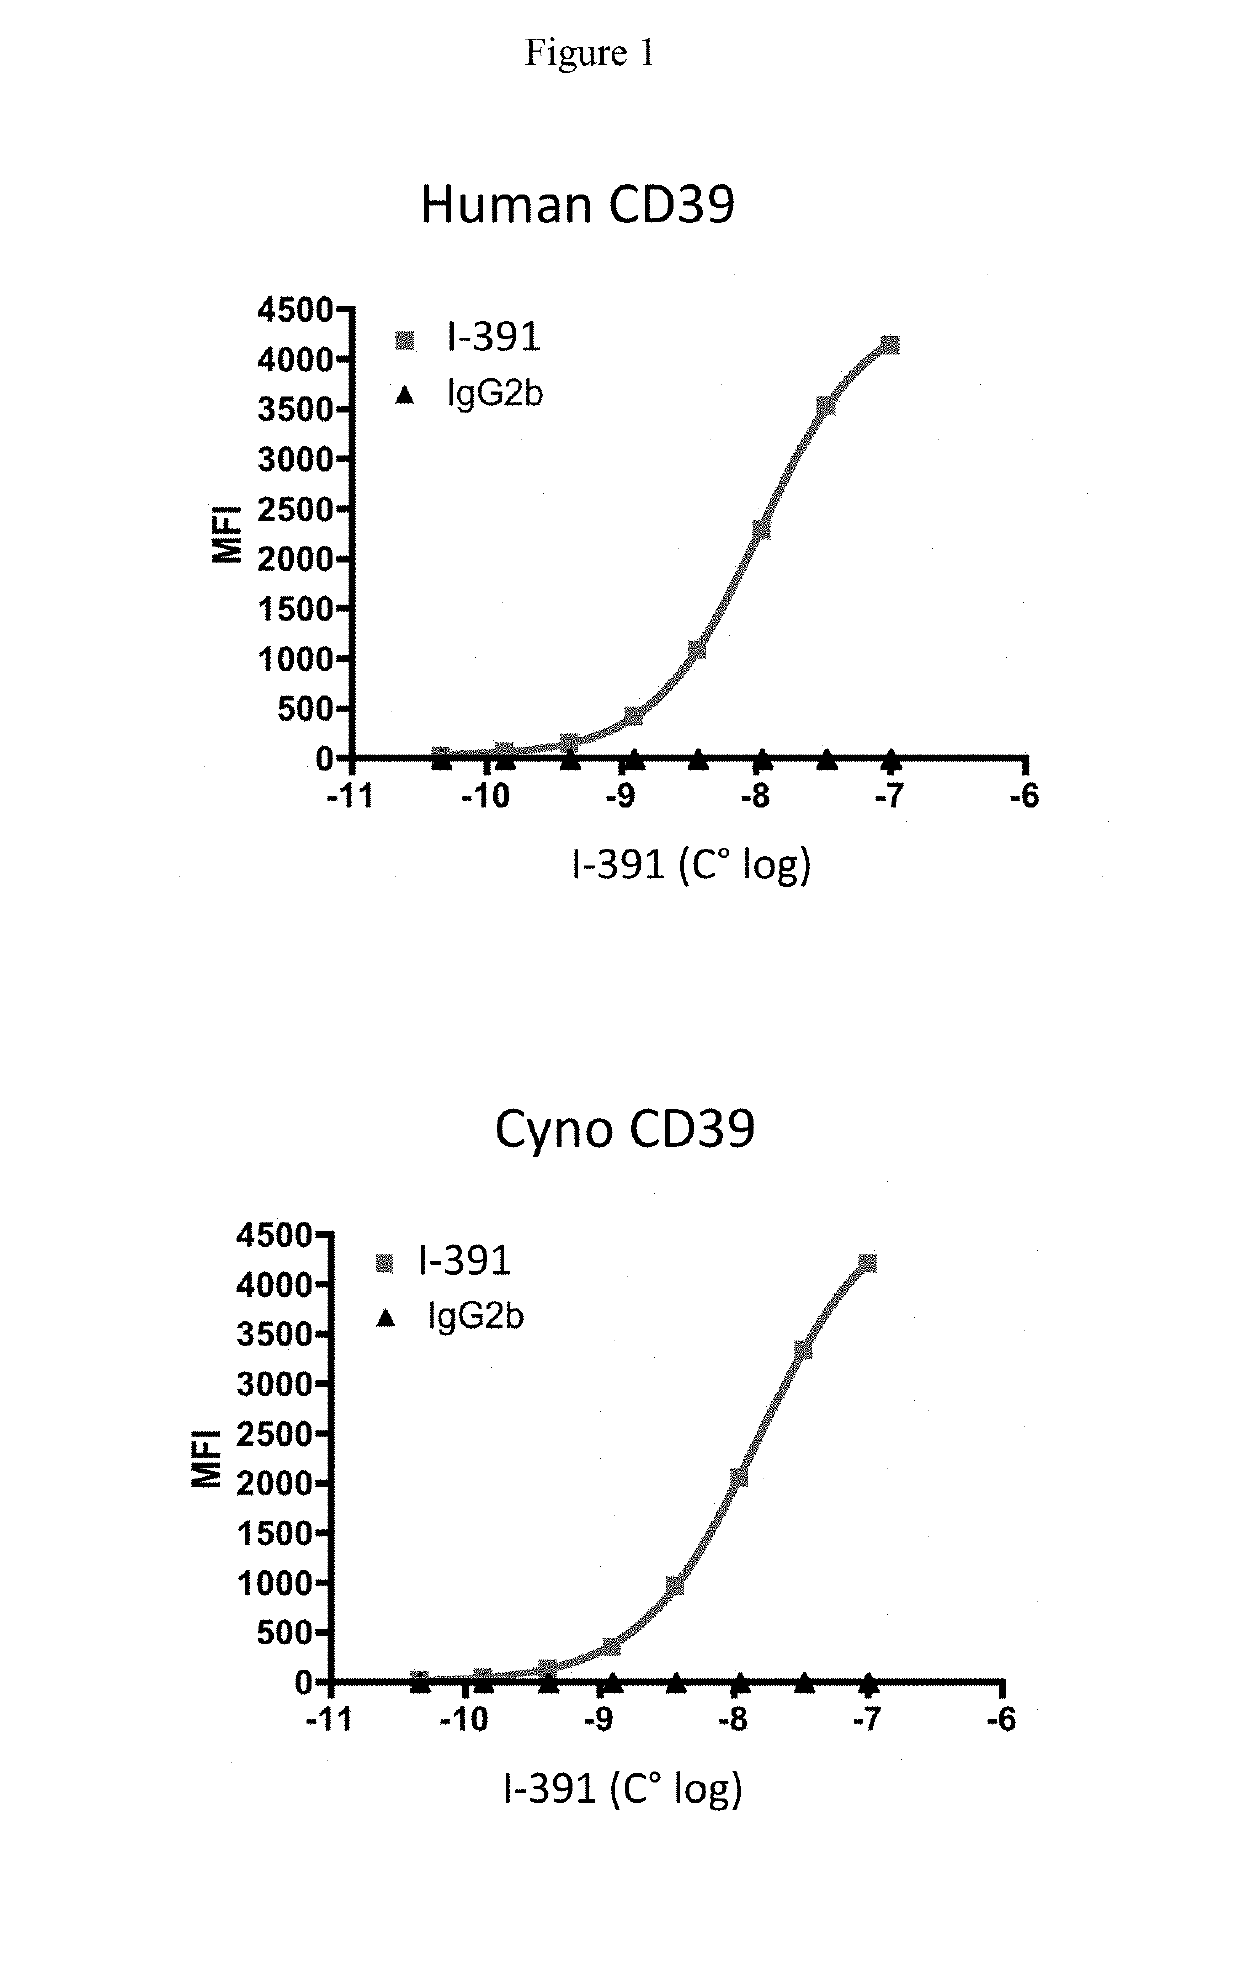 Cd39 vascular isoform targeting agents